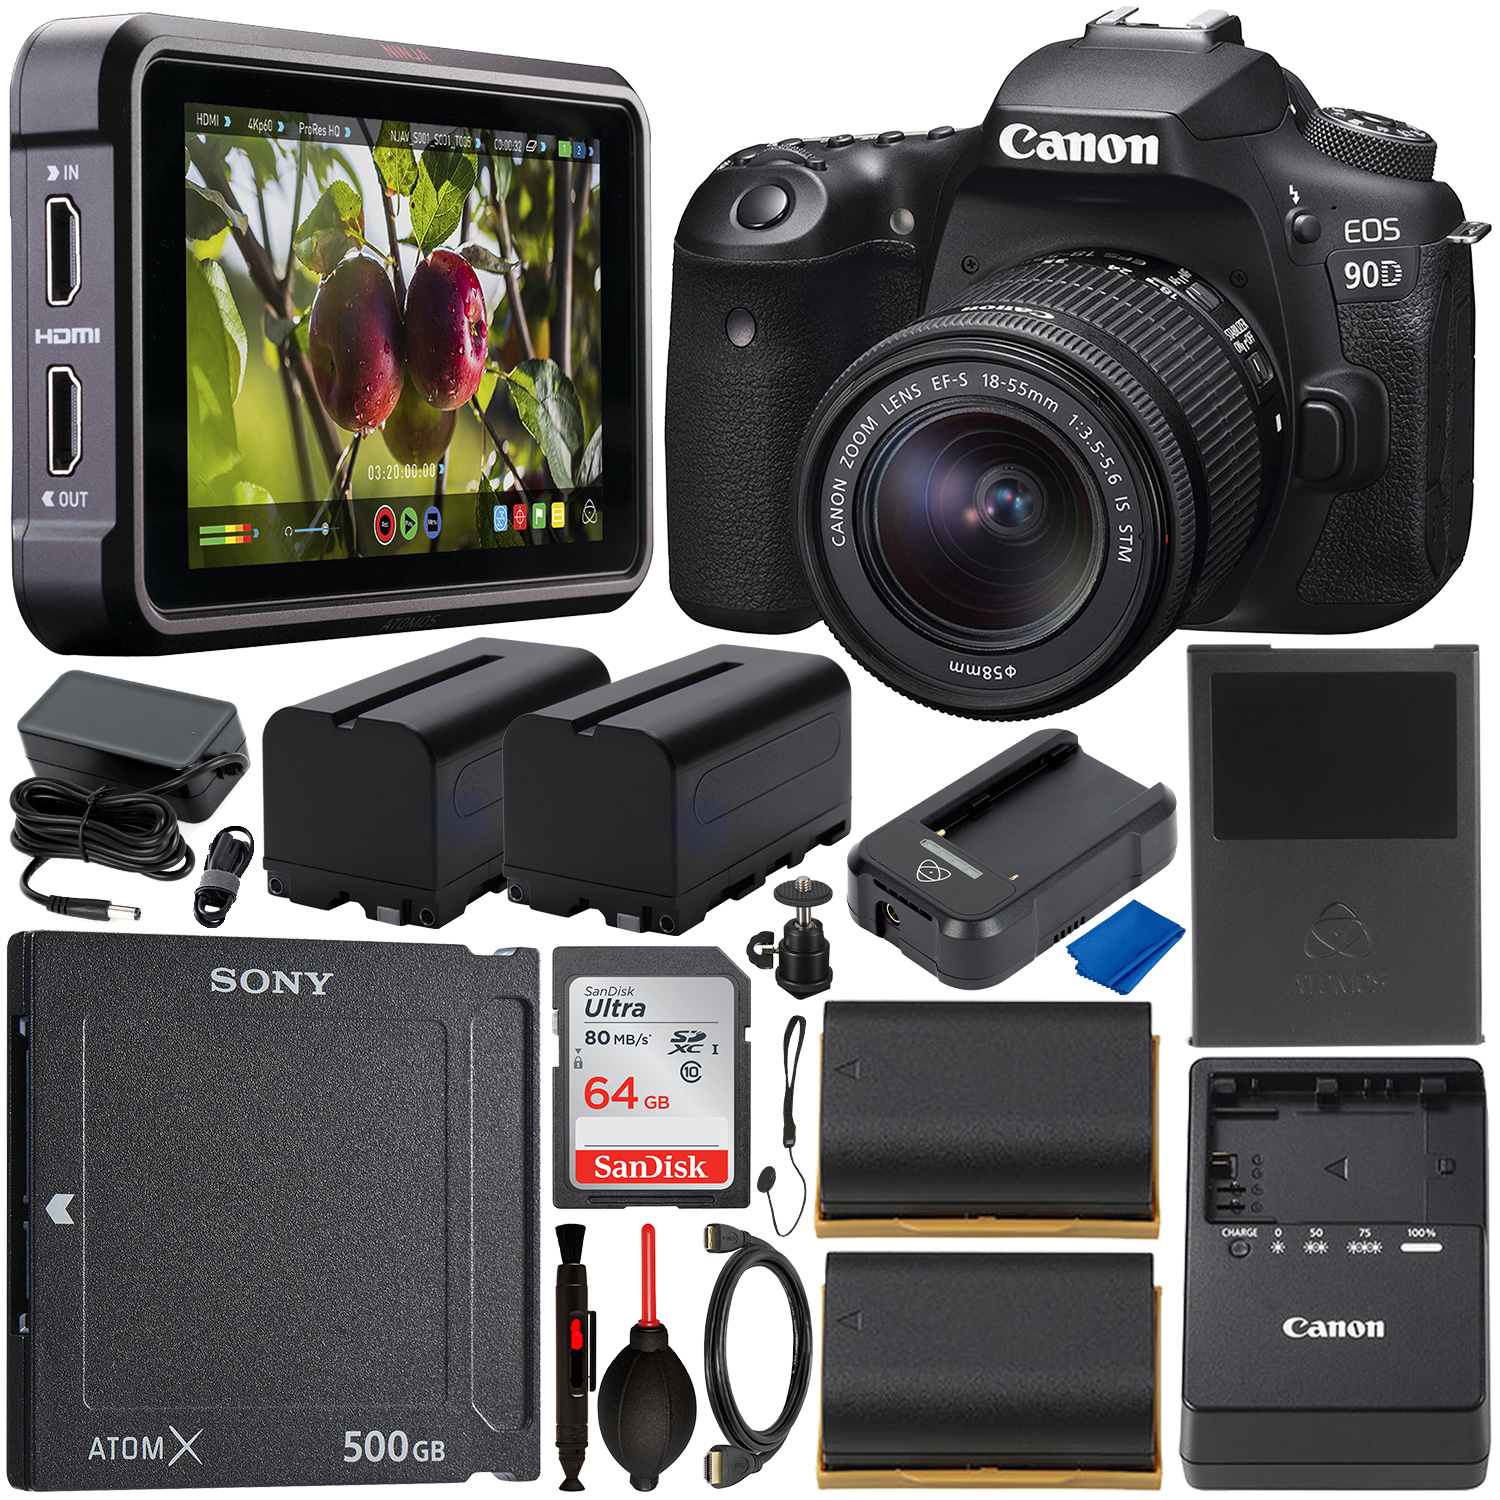 Canon EOS 90D DSLR Camera with 18-55mm Lens - 3616C009, Atomos Ninja V 5â? 4K HDMI Recording Monitor with Power Kit - ATOMNJAV01, Sony AtomX 500GB SSDmini - SV-MGS50/BT & Essential Accessory Bundle